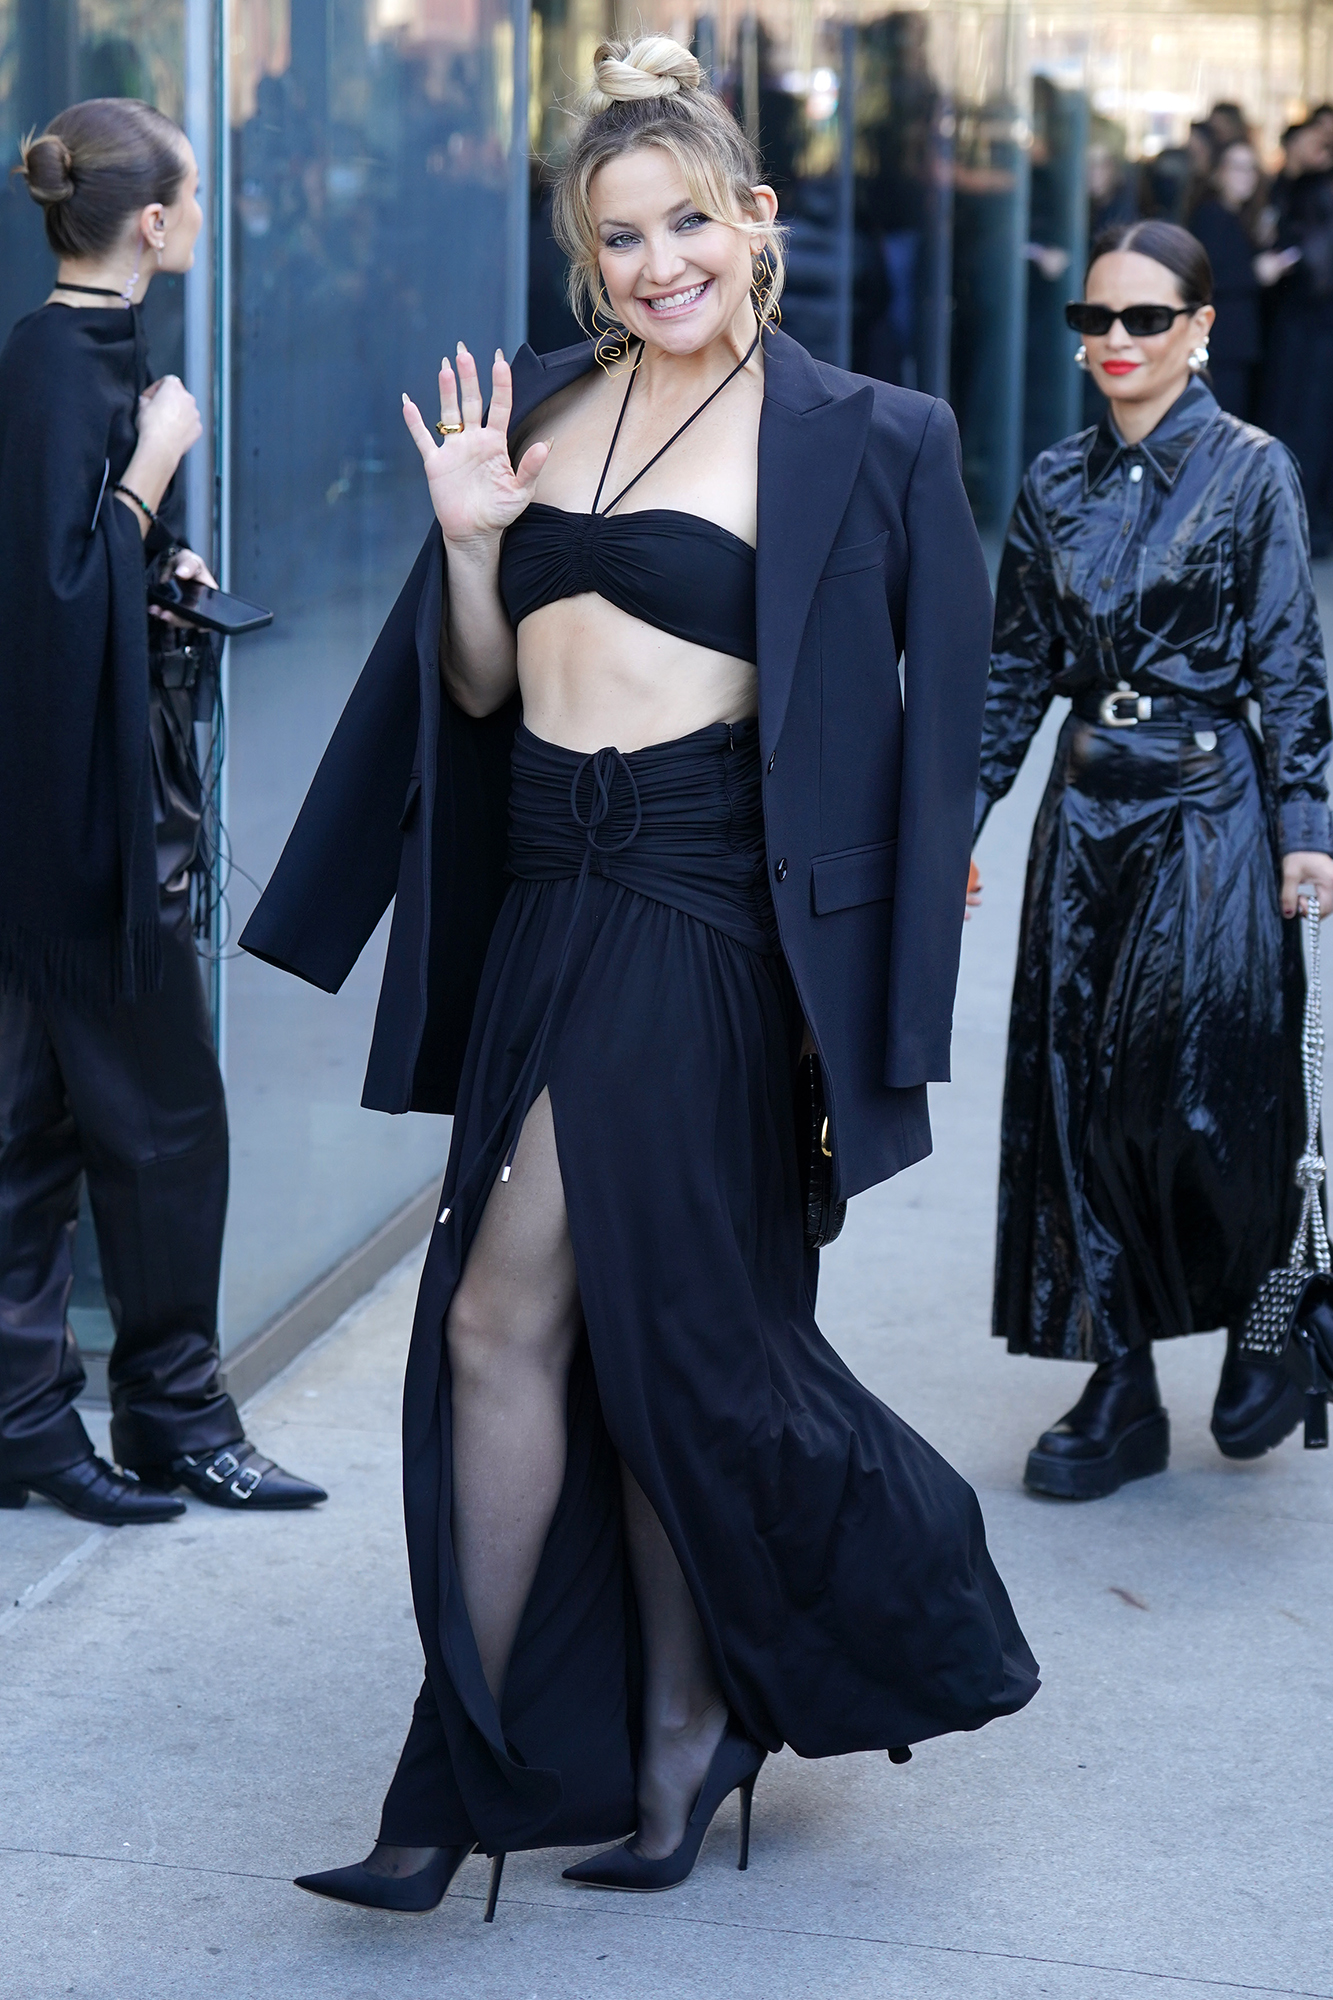 New York Fashion Week: See Lindsay Lohan, Julia Fox and More